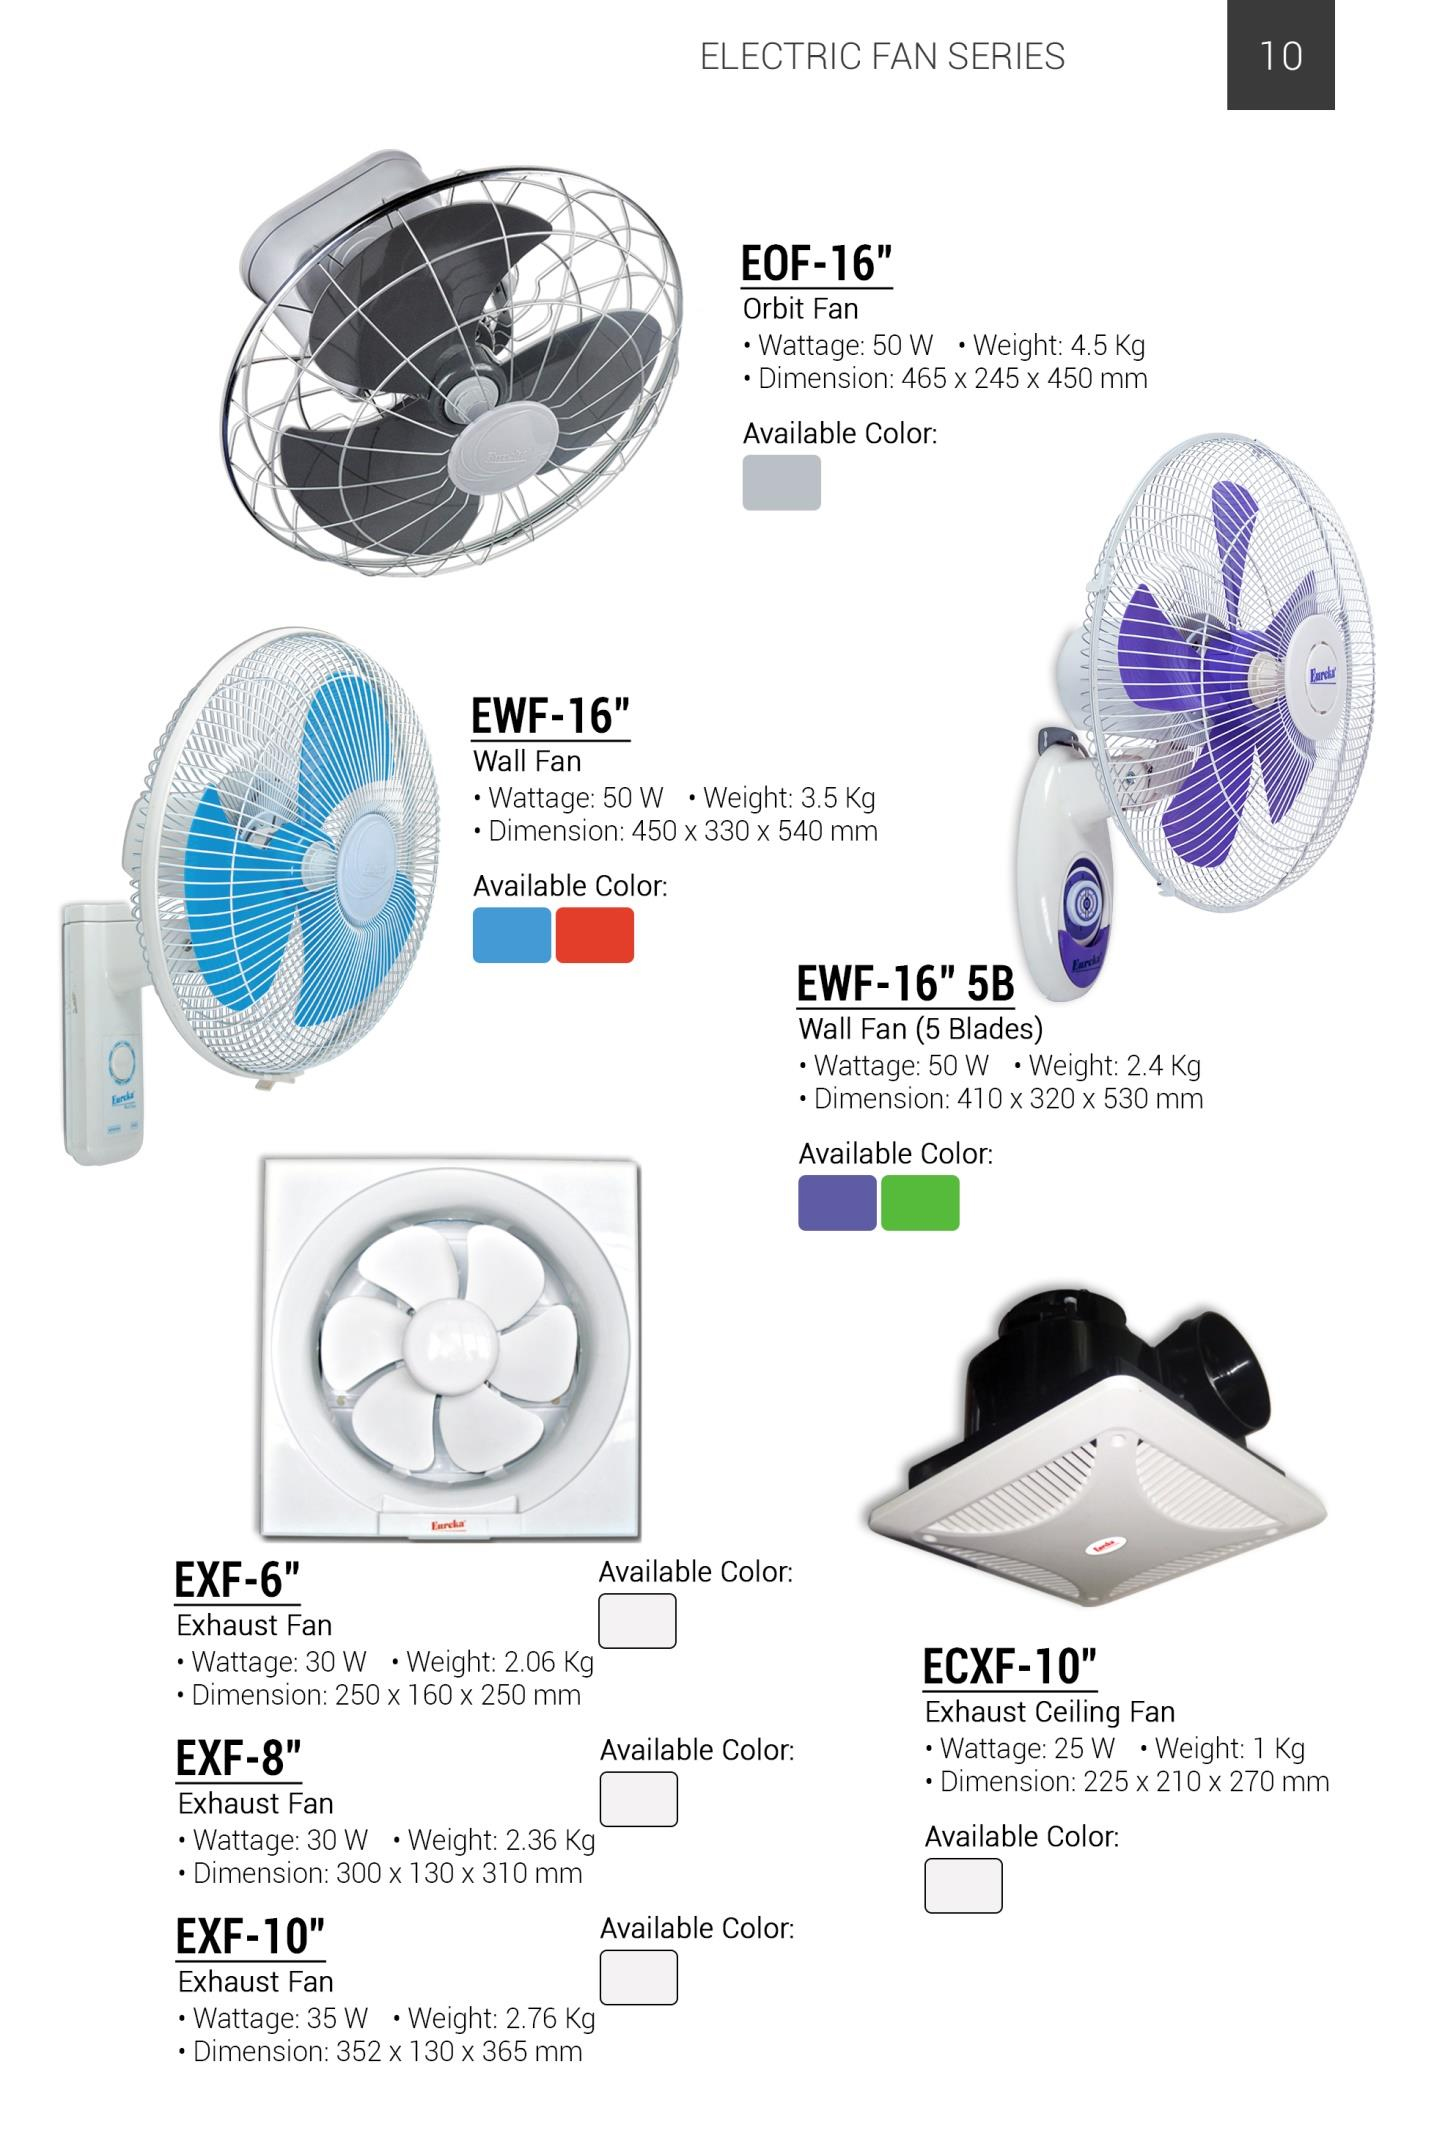 Eureka Ecxf 10 Exhaust Ceiling Fan Lazada Ph